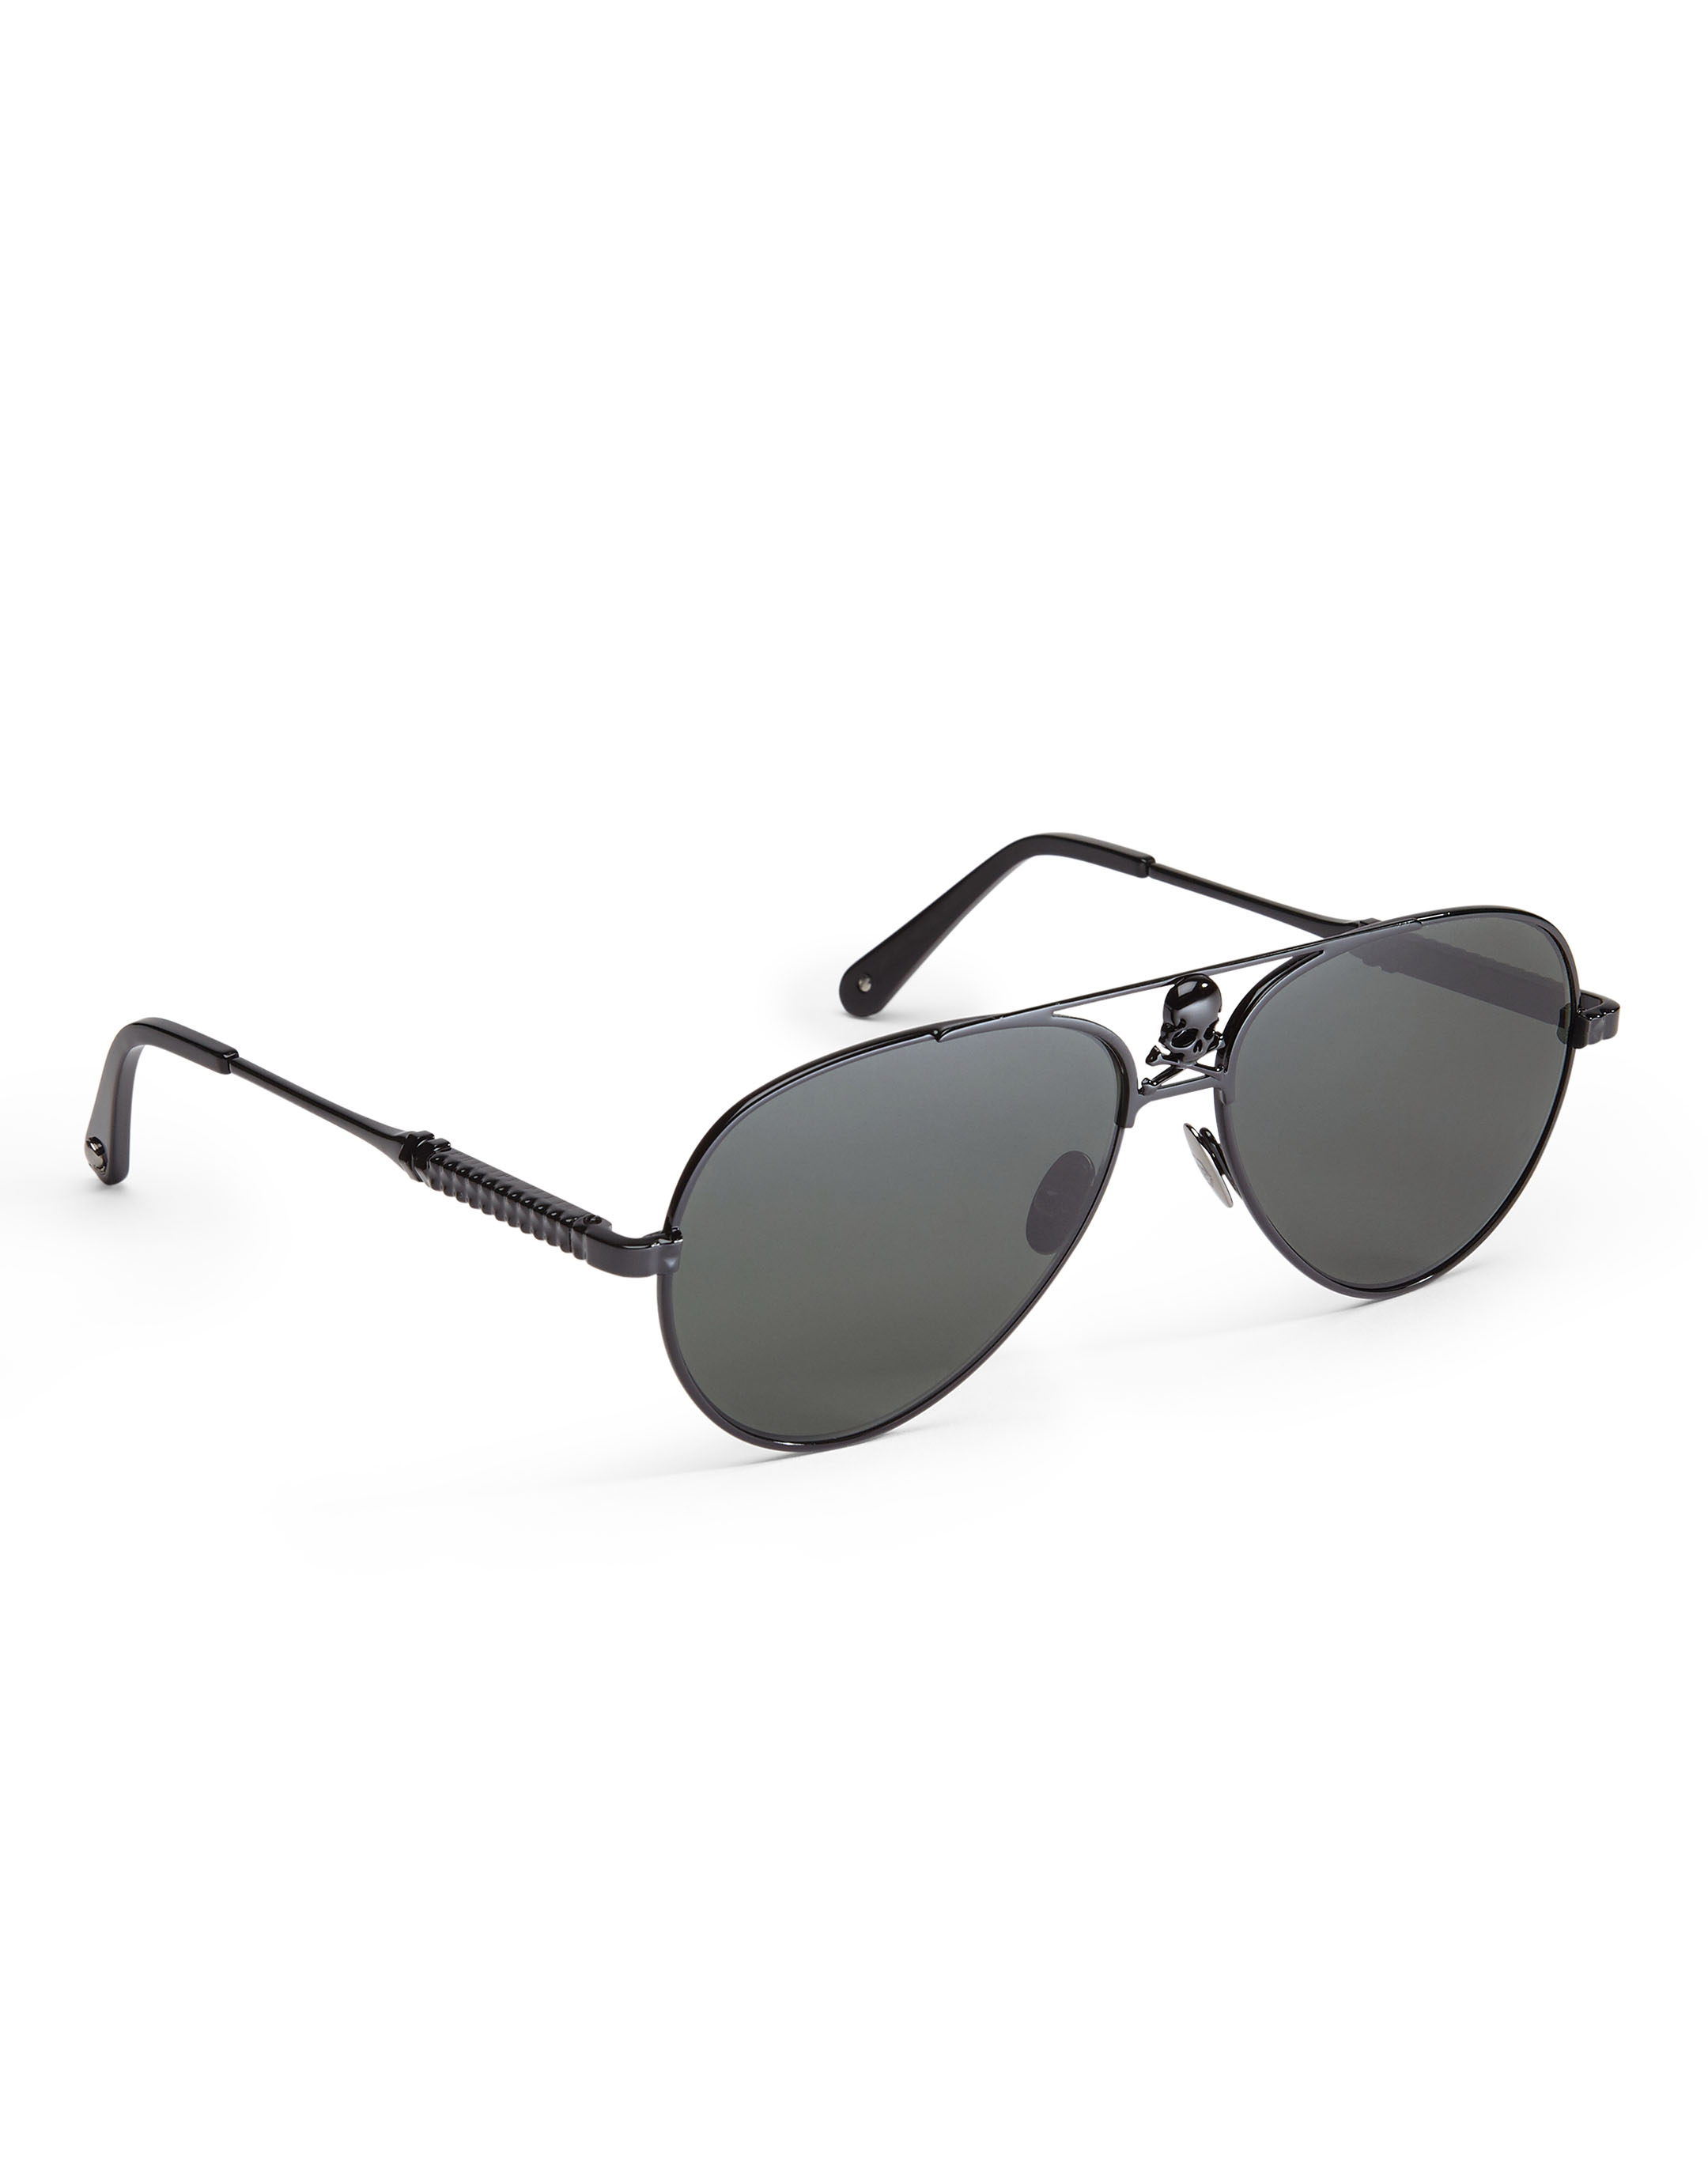 Sunglasses Seventy | Philipp Plein Outlet